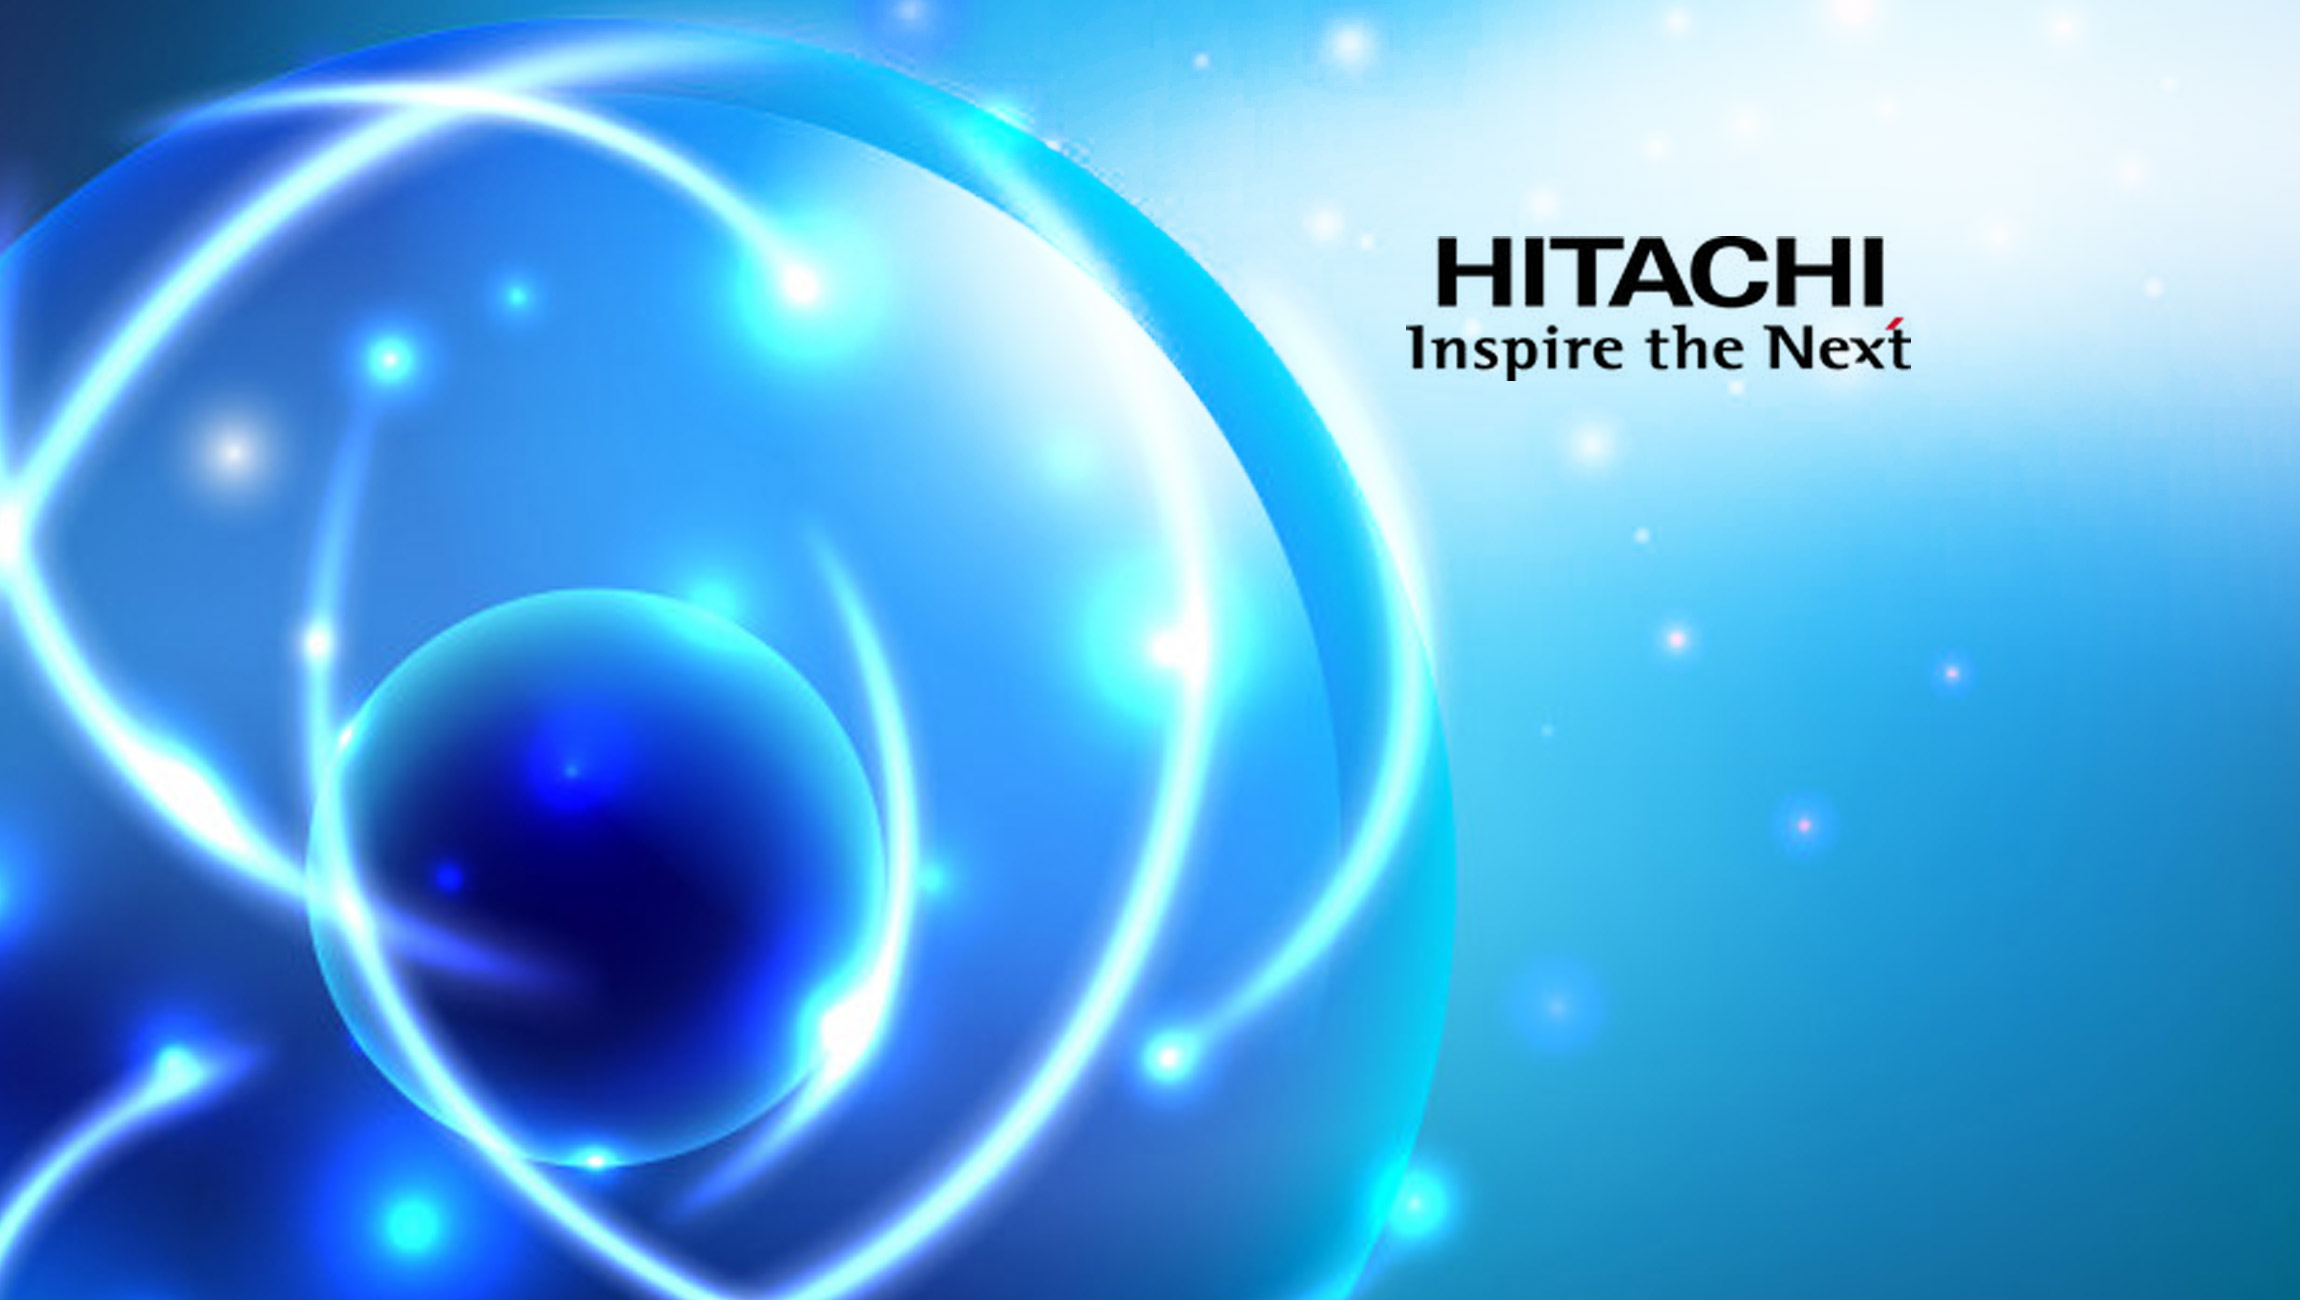 Hitachi Receives Overall Positive Rating in 2021 Gartner Vendor Rating Report